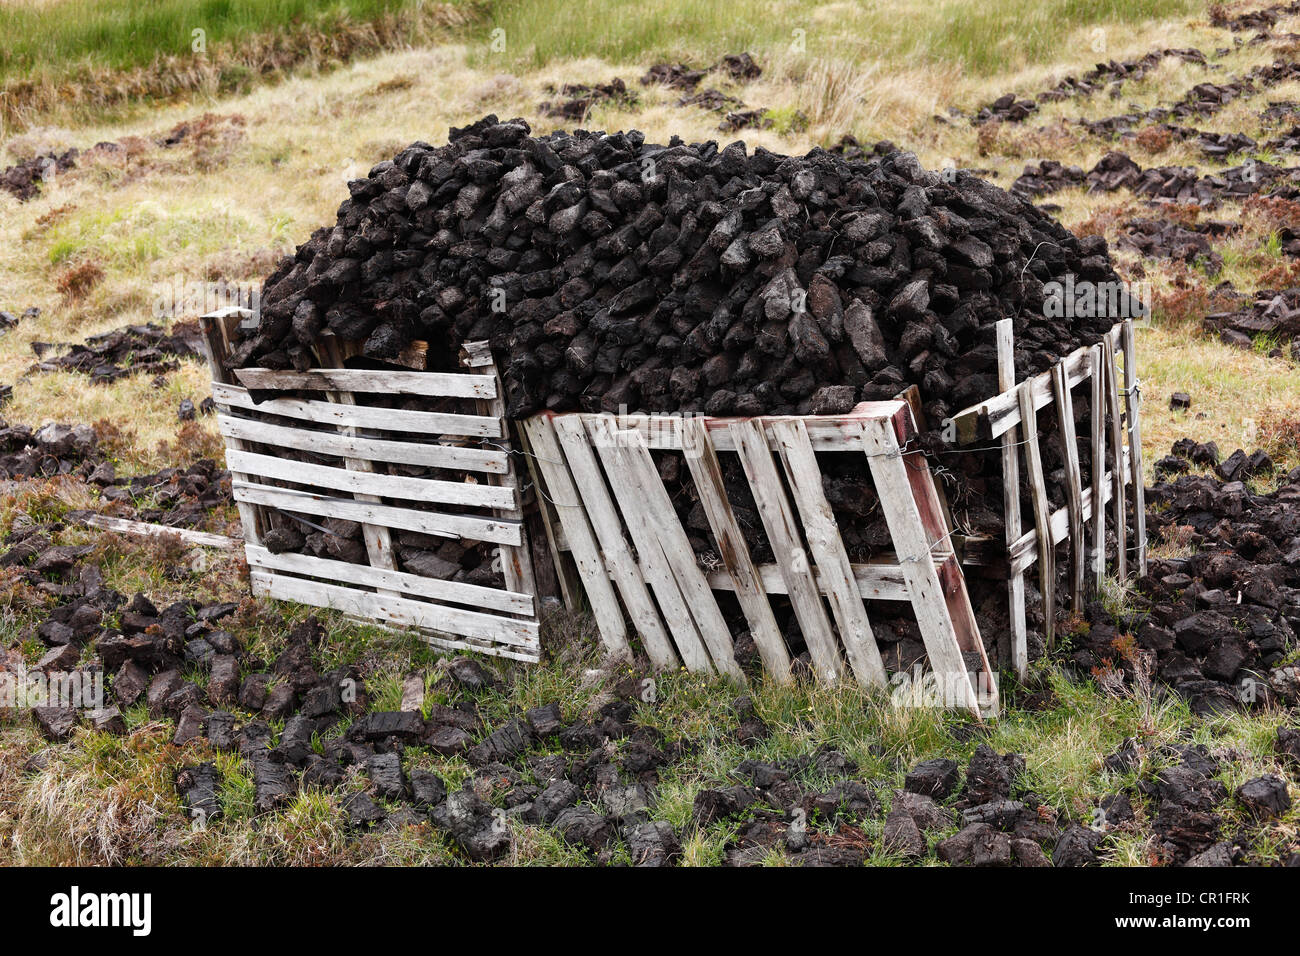 Peat cutting, Glencolumbcille, or Glencolumbkille, County Donegal, Ireland, Europe, PublicGround Stock Photo